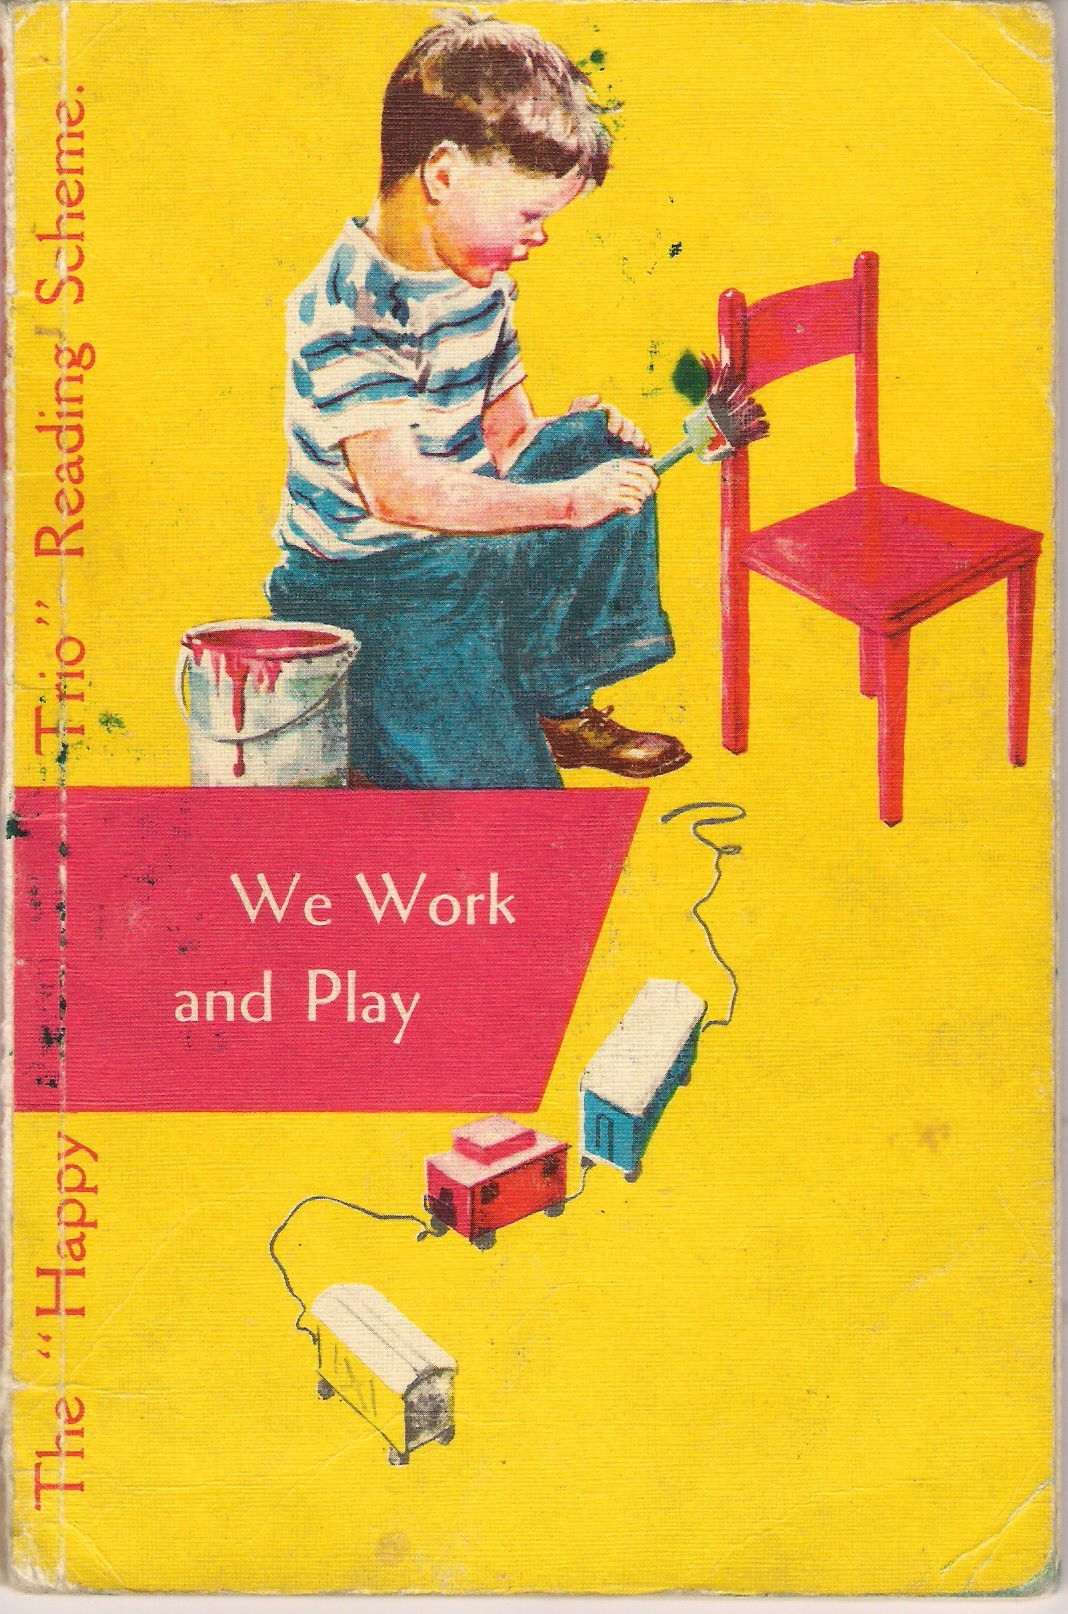 Read Dick & Jane, school reader 1950's-60's, PDF